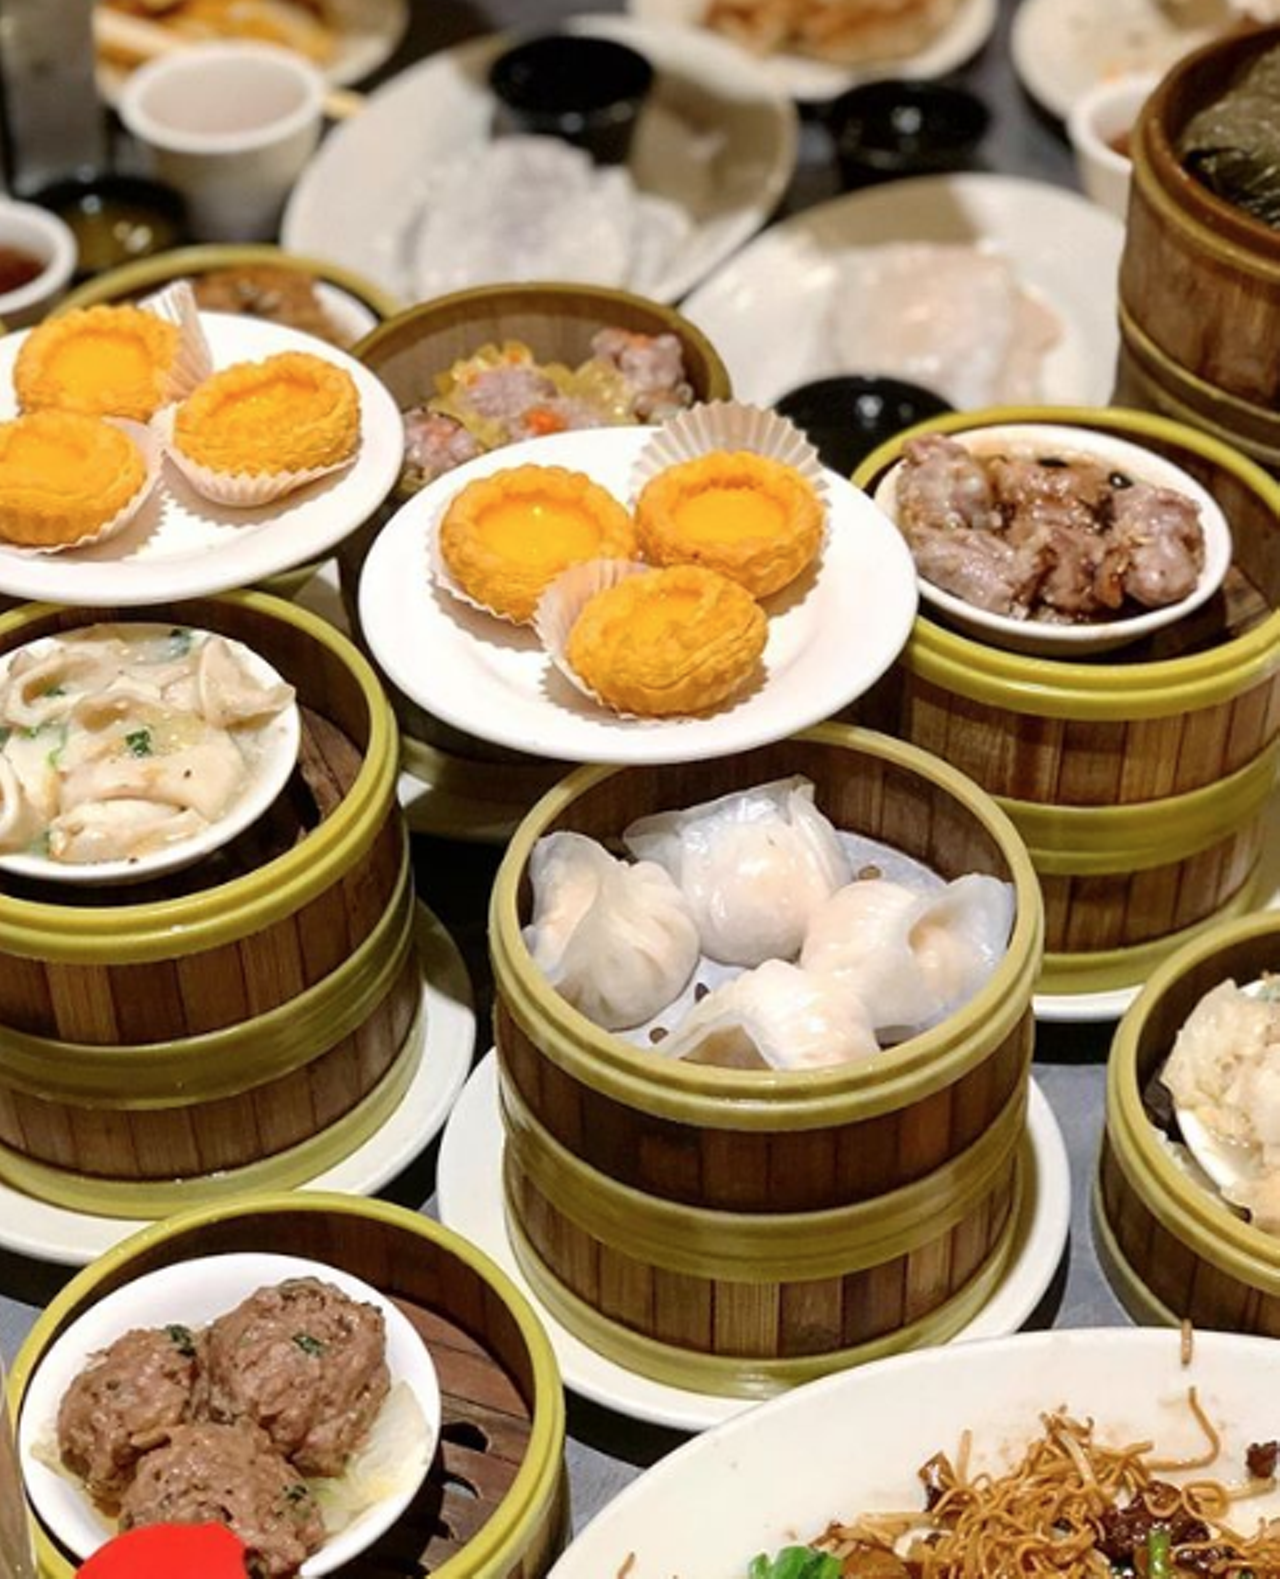 Best Chinese Restaurant
Golden Wok, multiple locations, goldenwoksa.com
Photo via Instagram / stine.eats